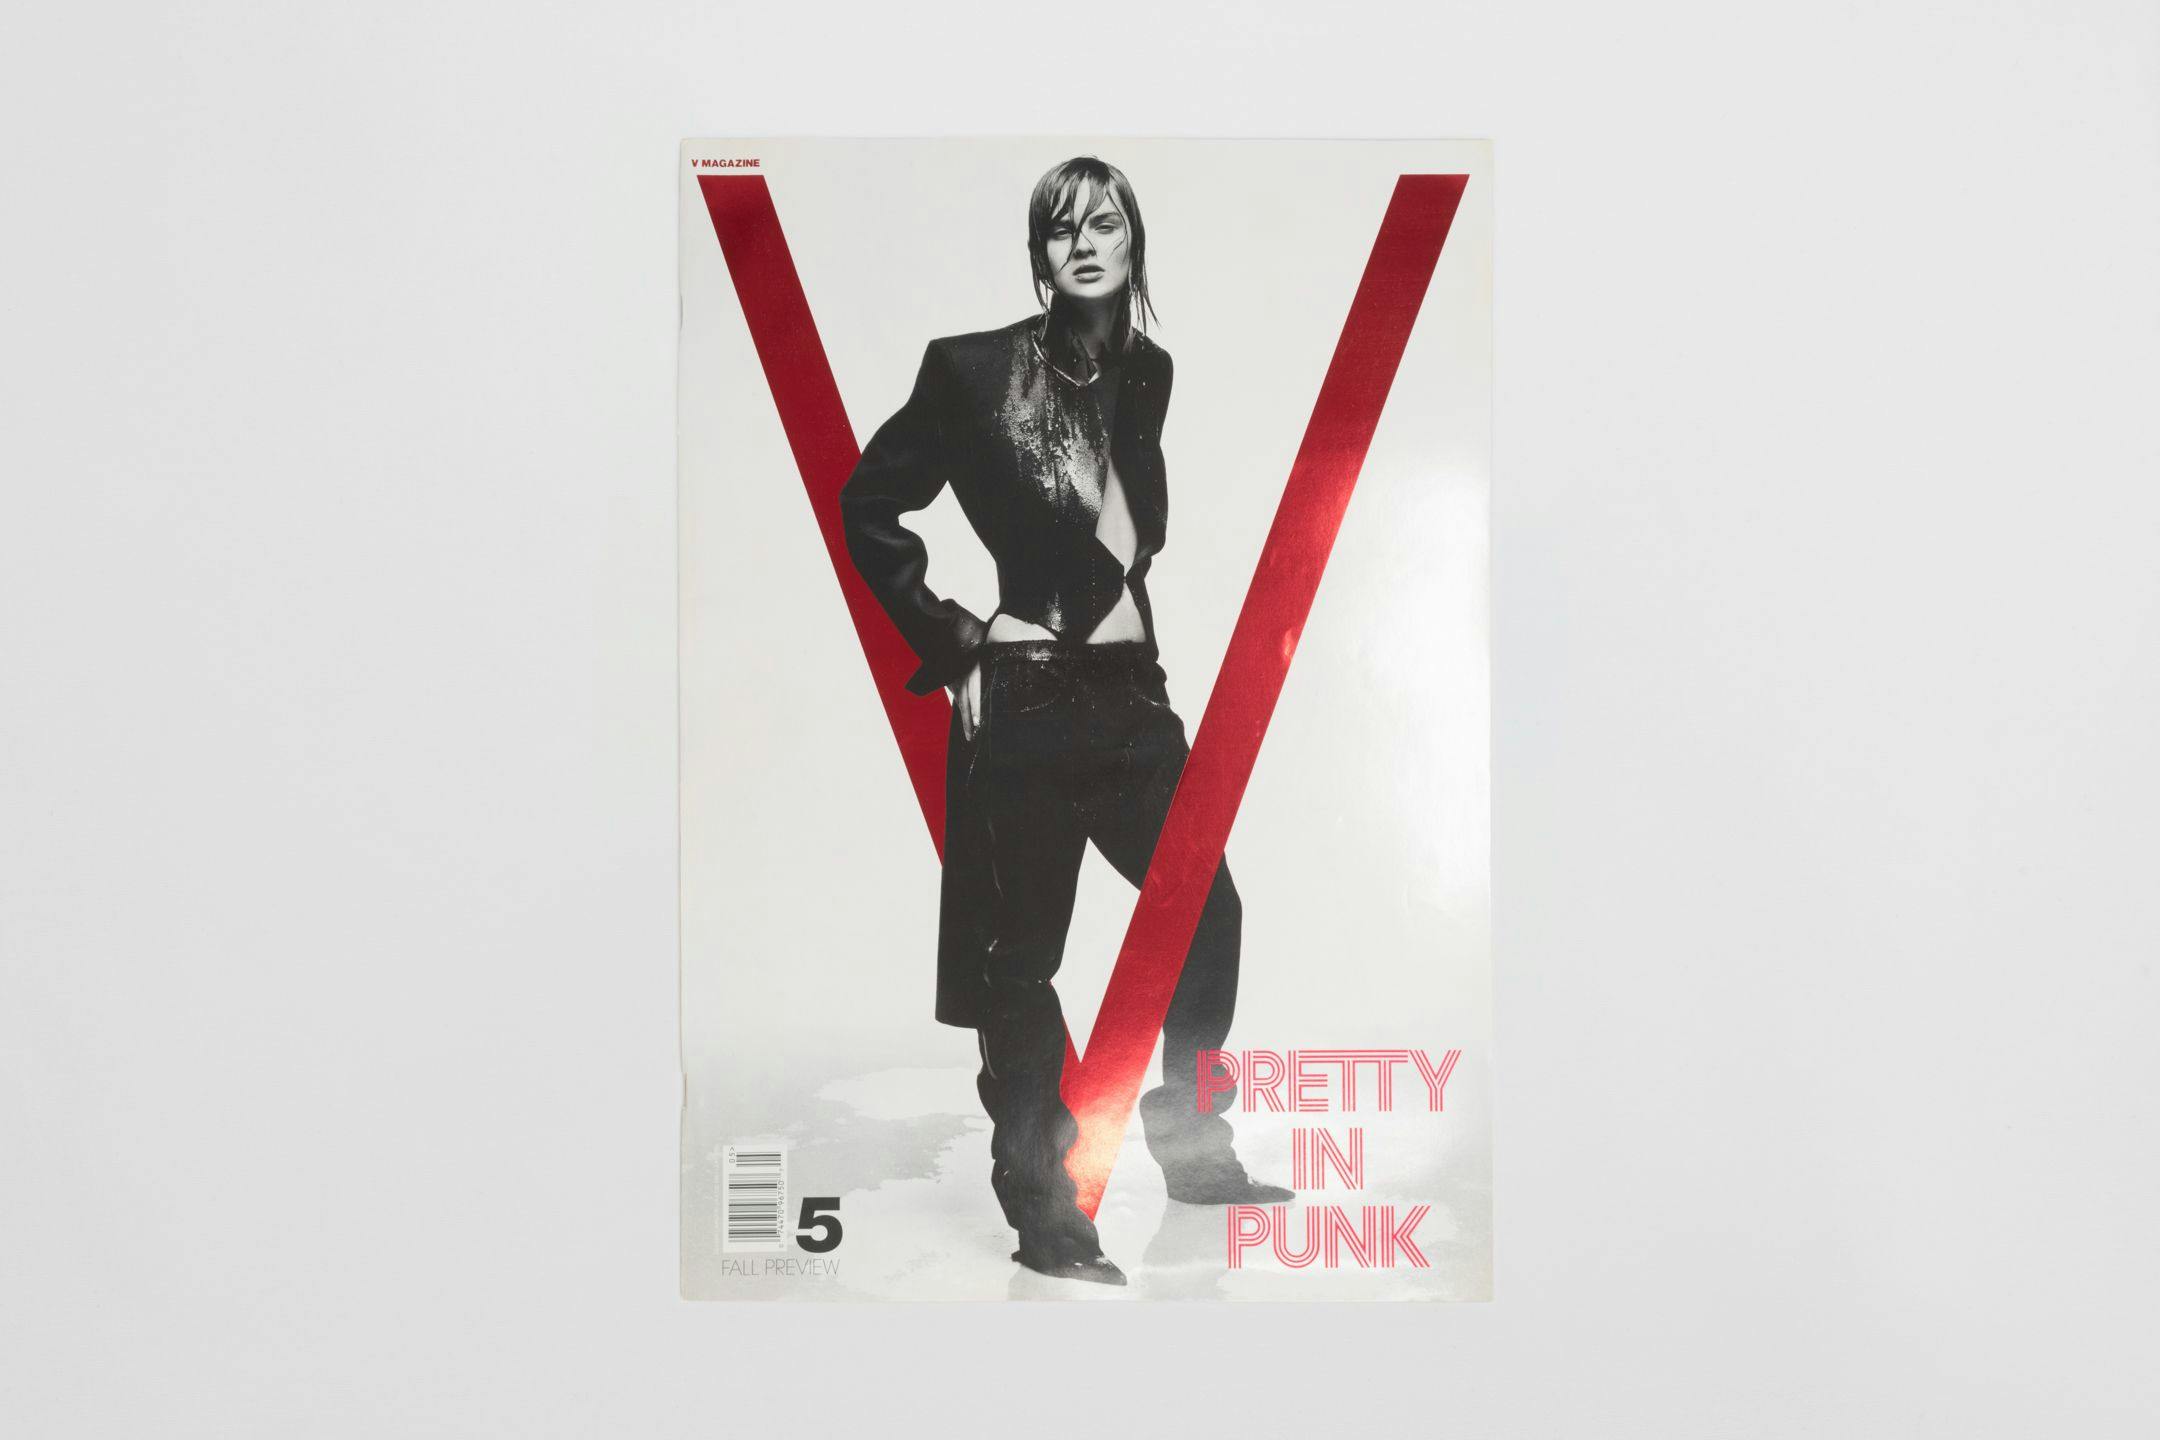 V Magazine Issue 5, "Pretty in Punk"